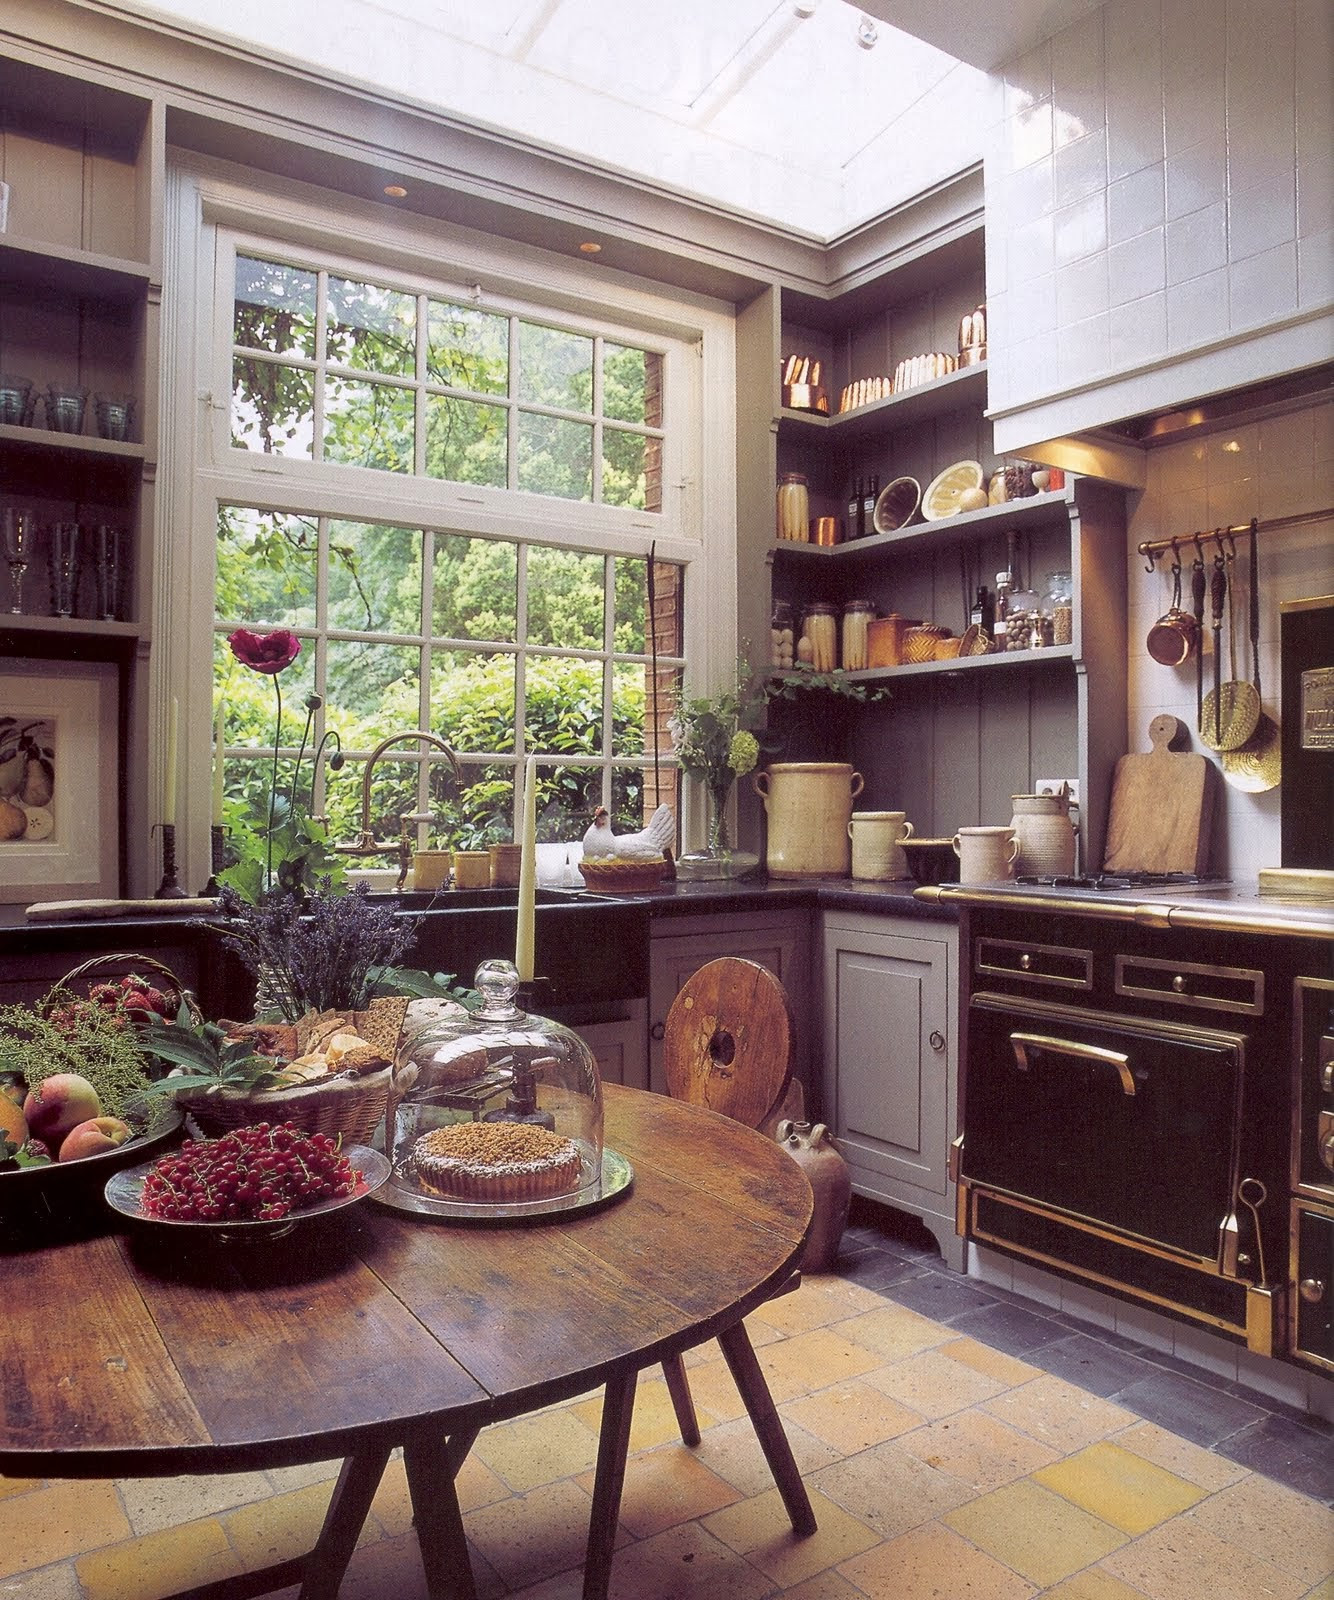 Rustic Kitchen Accessories
 The Centric Home Boho Kitchen Decor